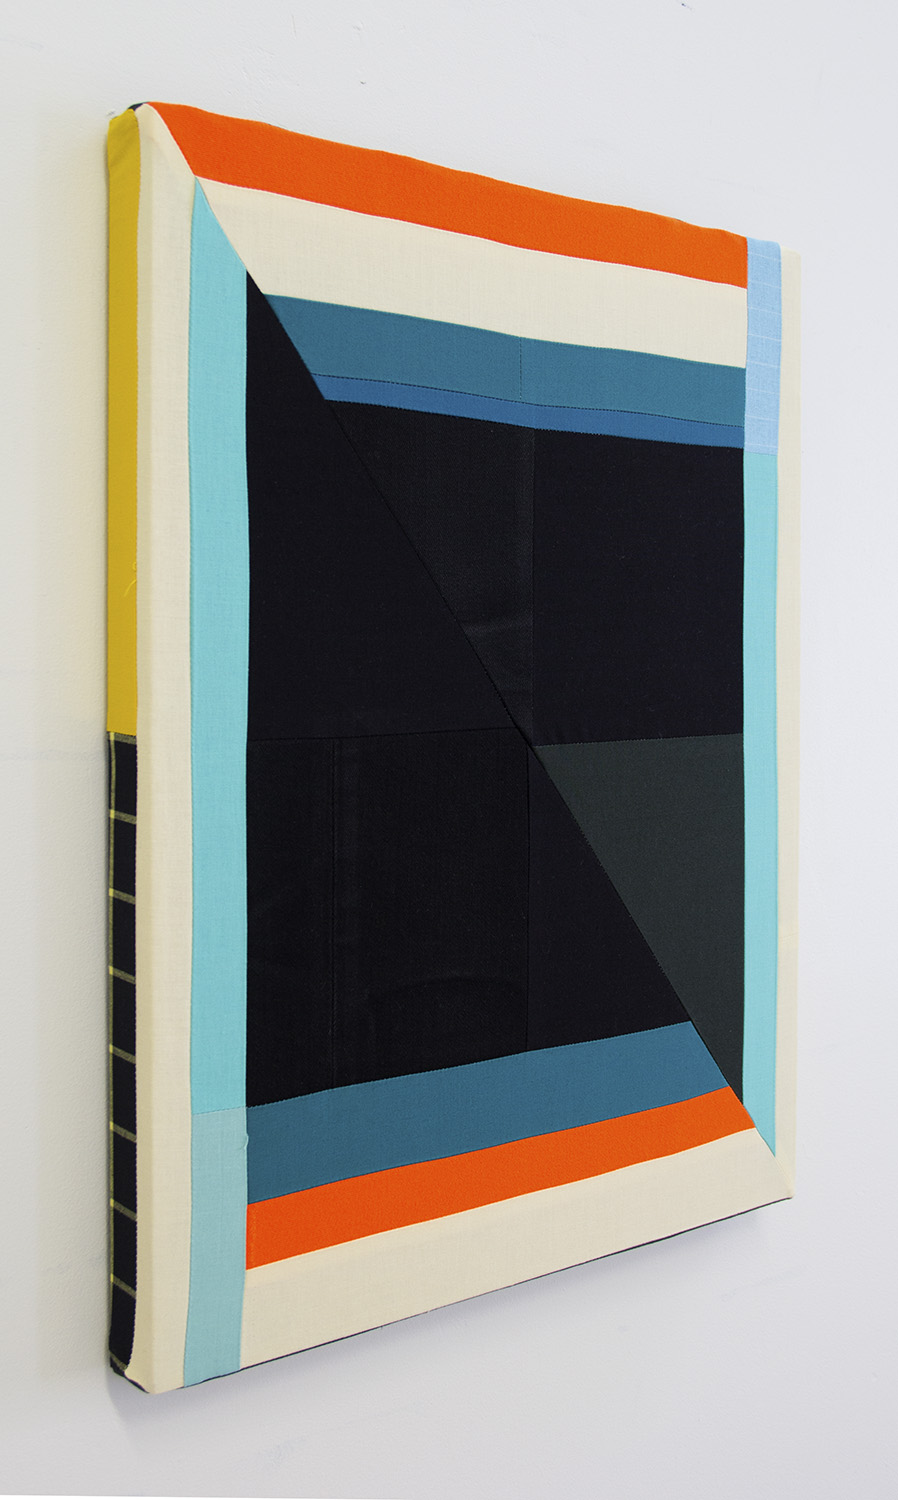    of Color, No. 5 (side view)   ,  2019 Sewn canvas, cotton, Levi’s denim, acrylic 20 x 16 inches (50.8 x 40.6 cm) 